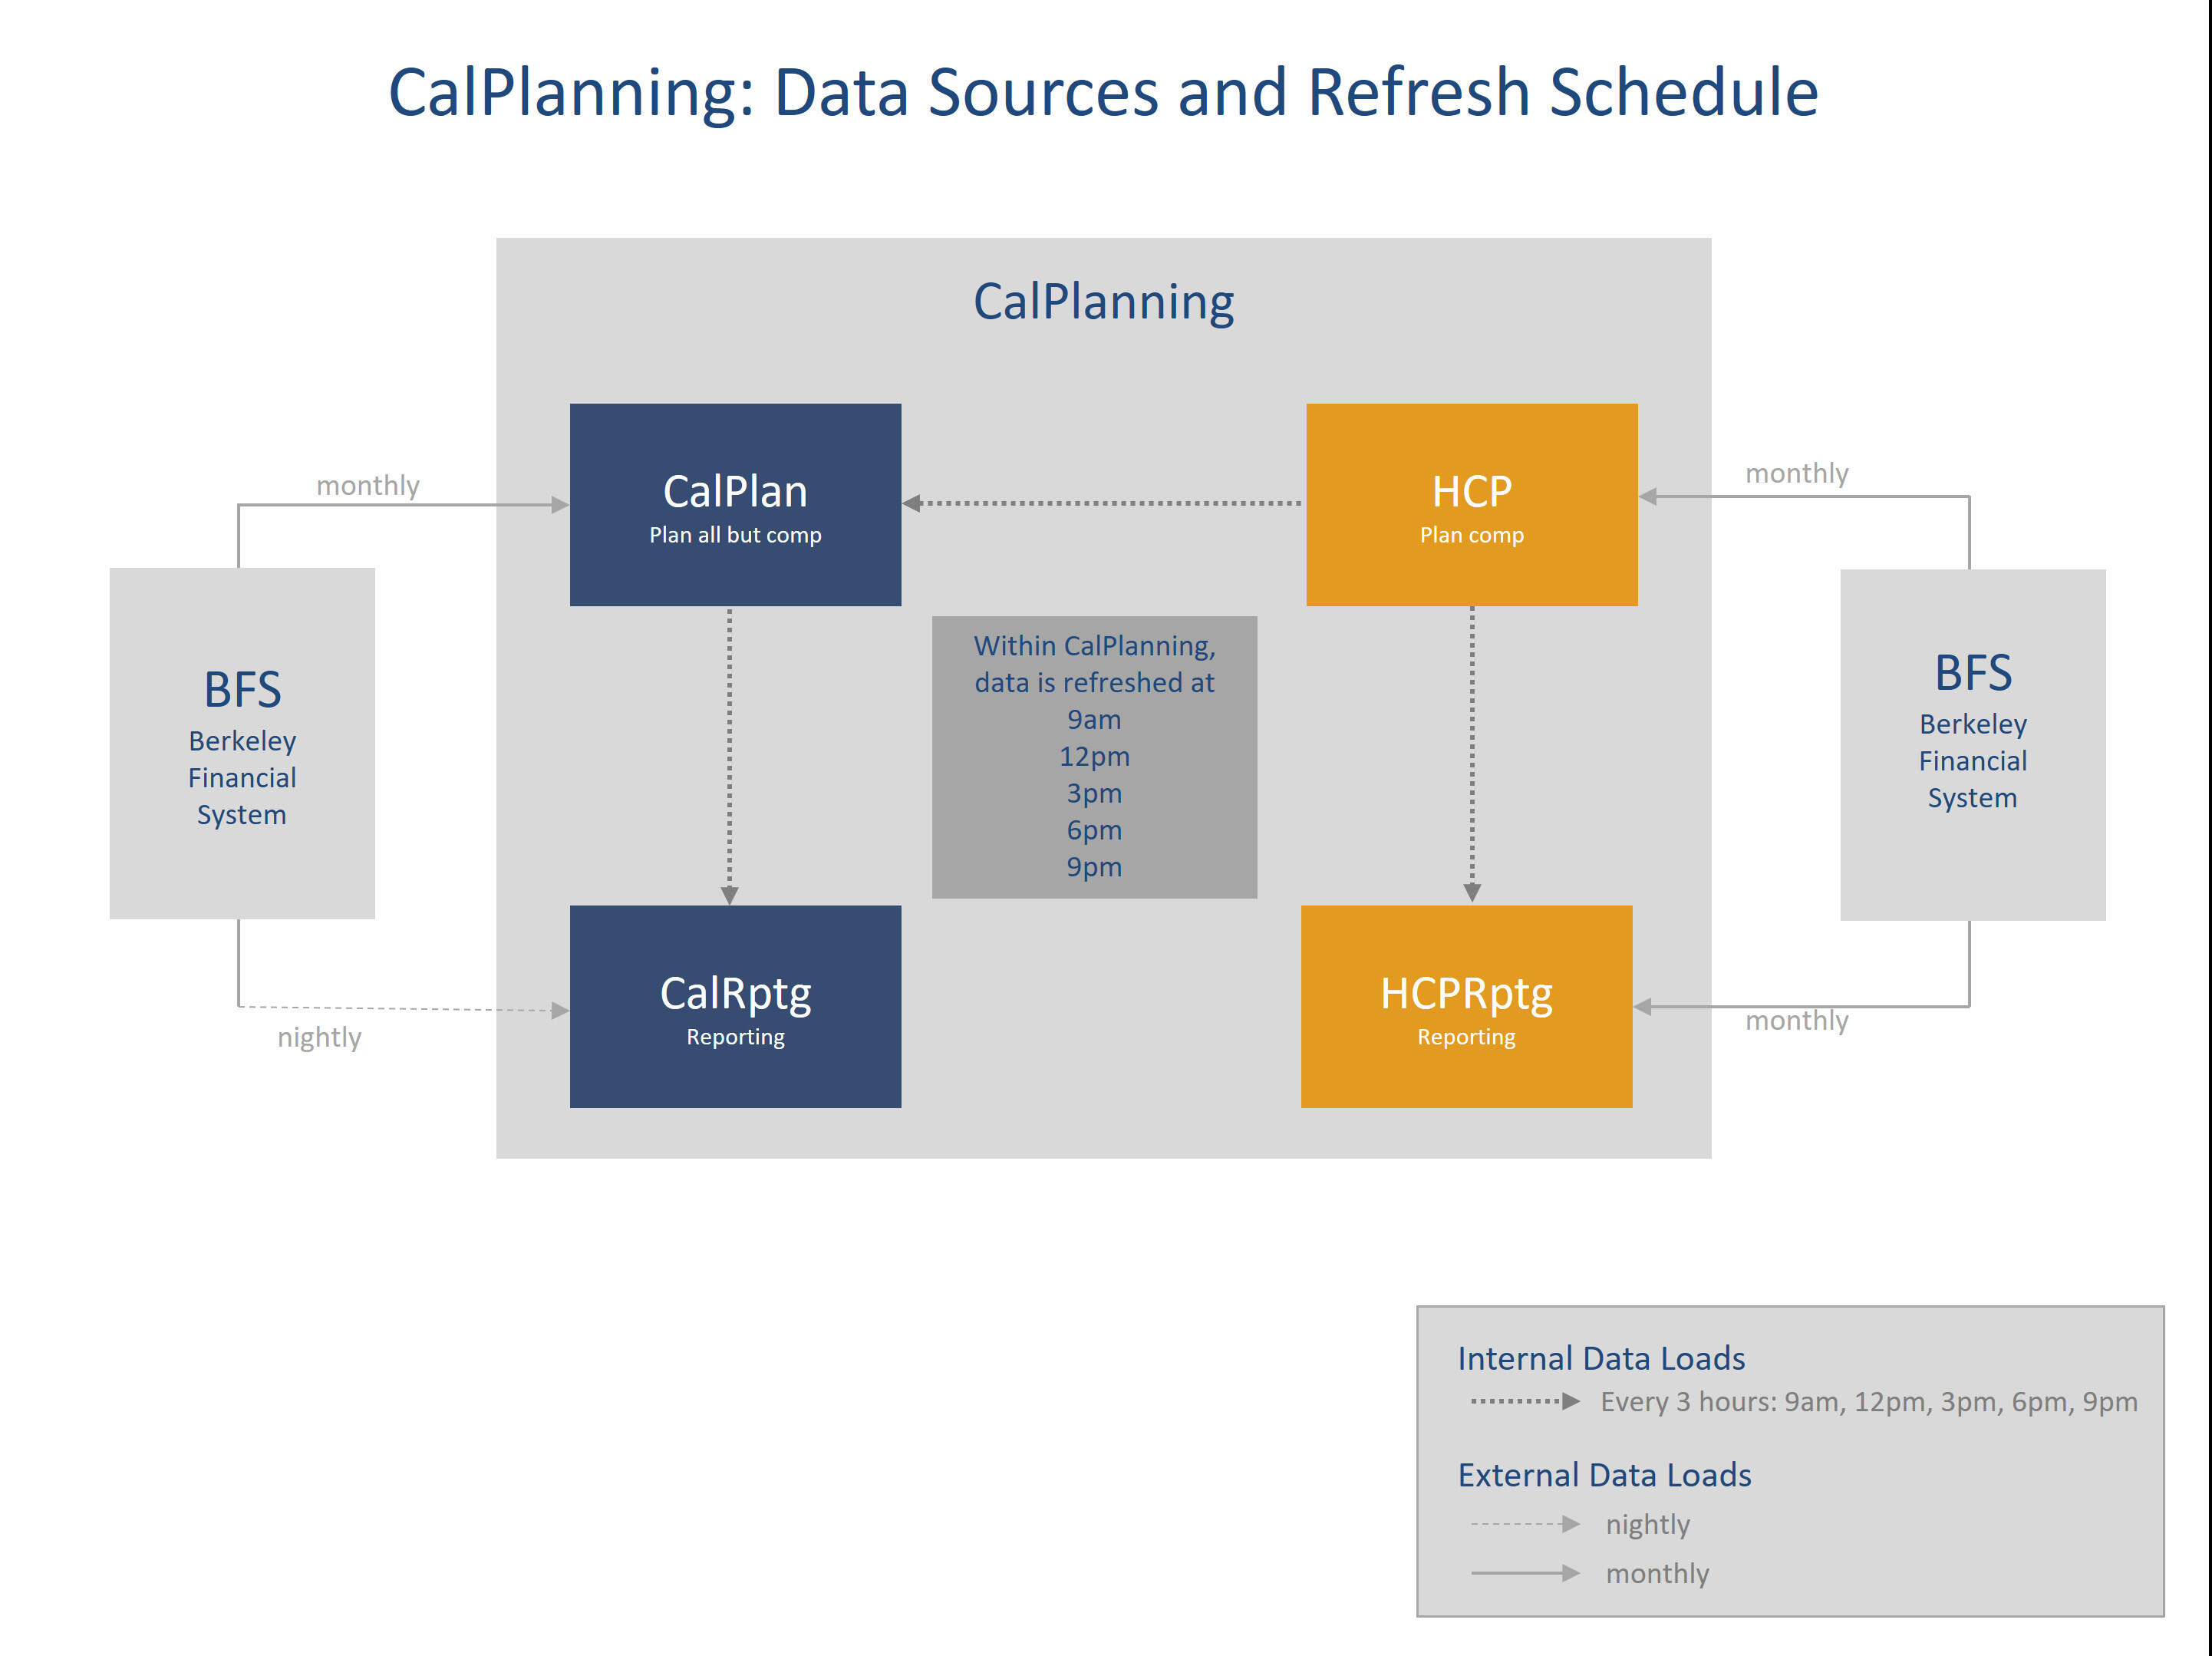 CalPlanning data sources and refresh schedule visual representation